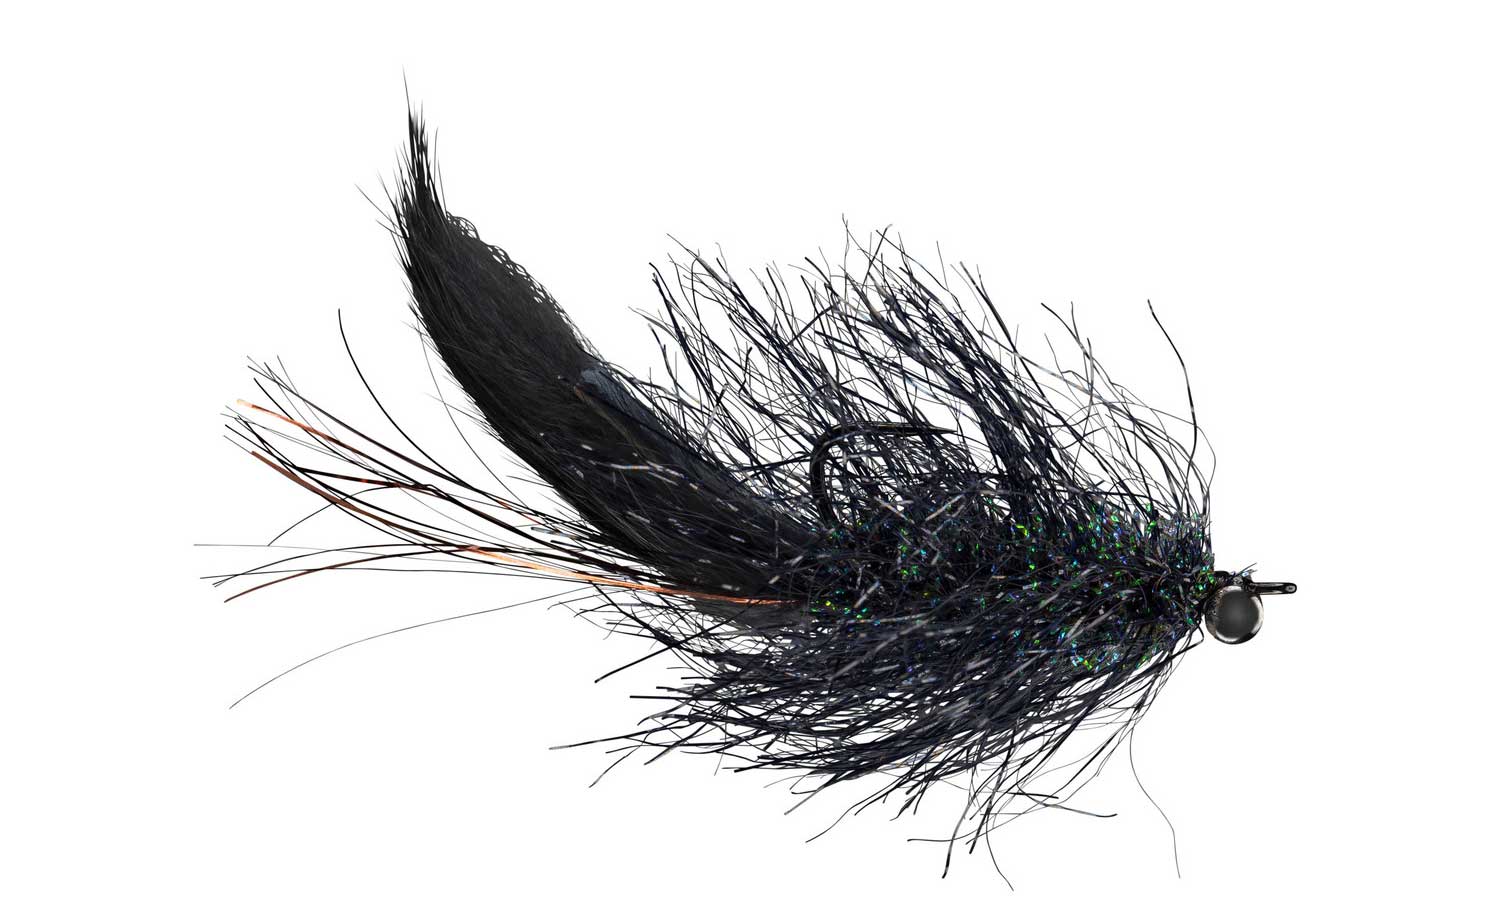 Hare Snare #1 - Silver Salmon Flies - Alaska Fly Fishing Goods